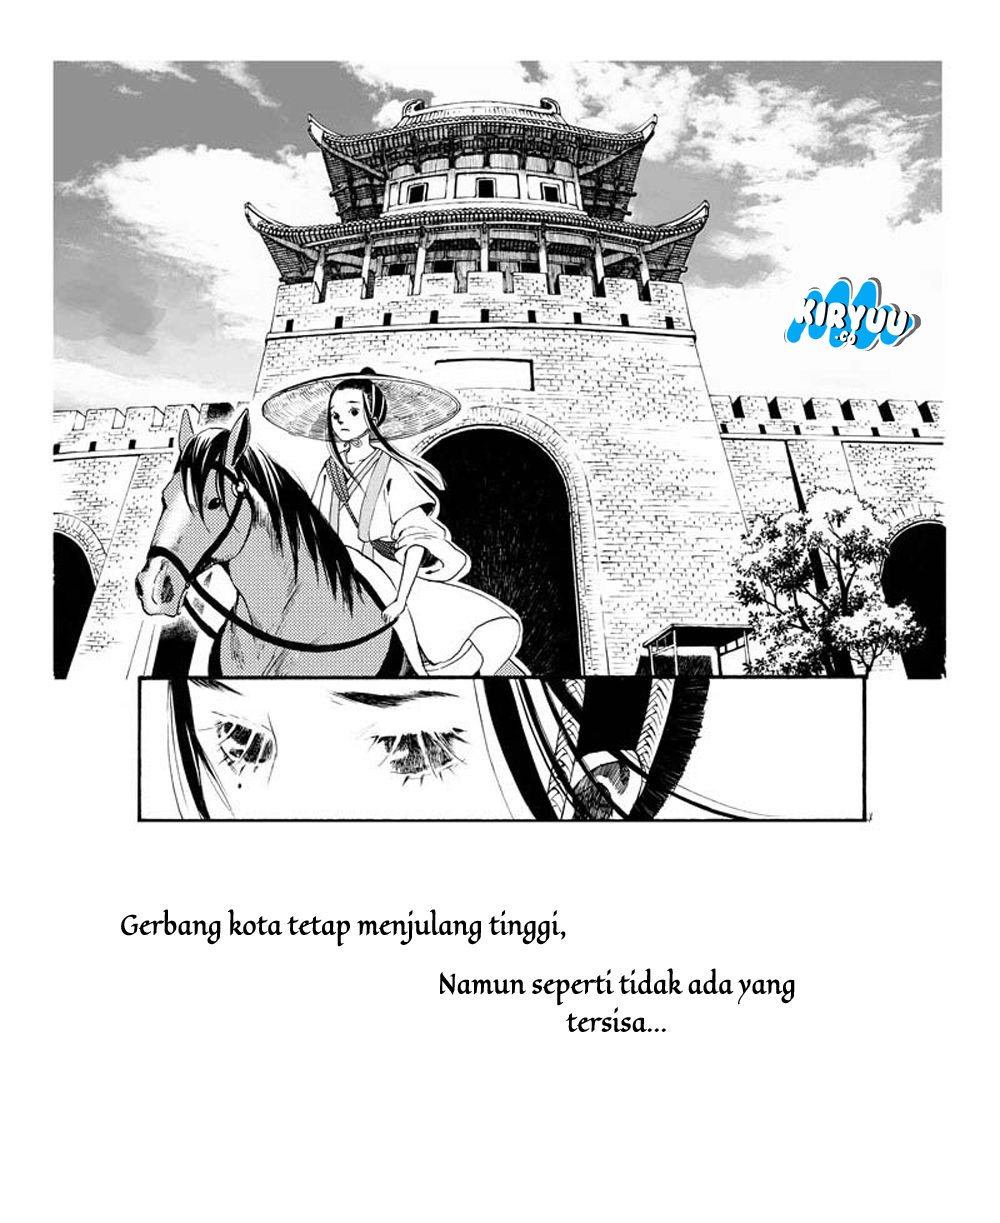 Baca Song of the Long March Chapter 0  - GudangKomik